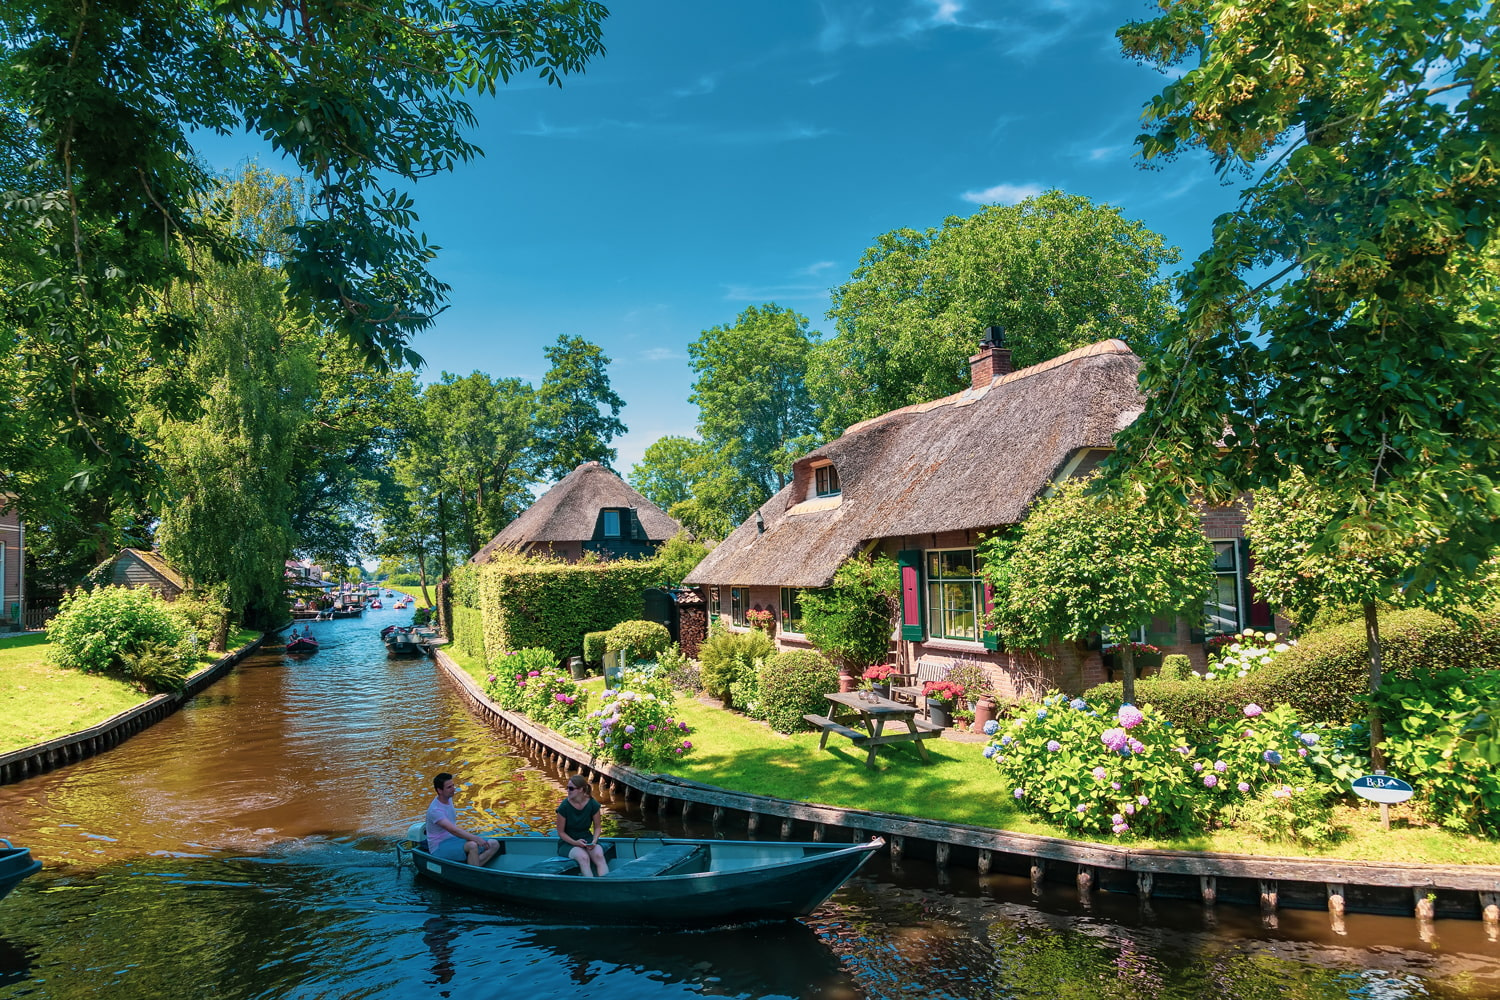 The prettiest village in the Netherlands